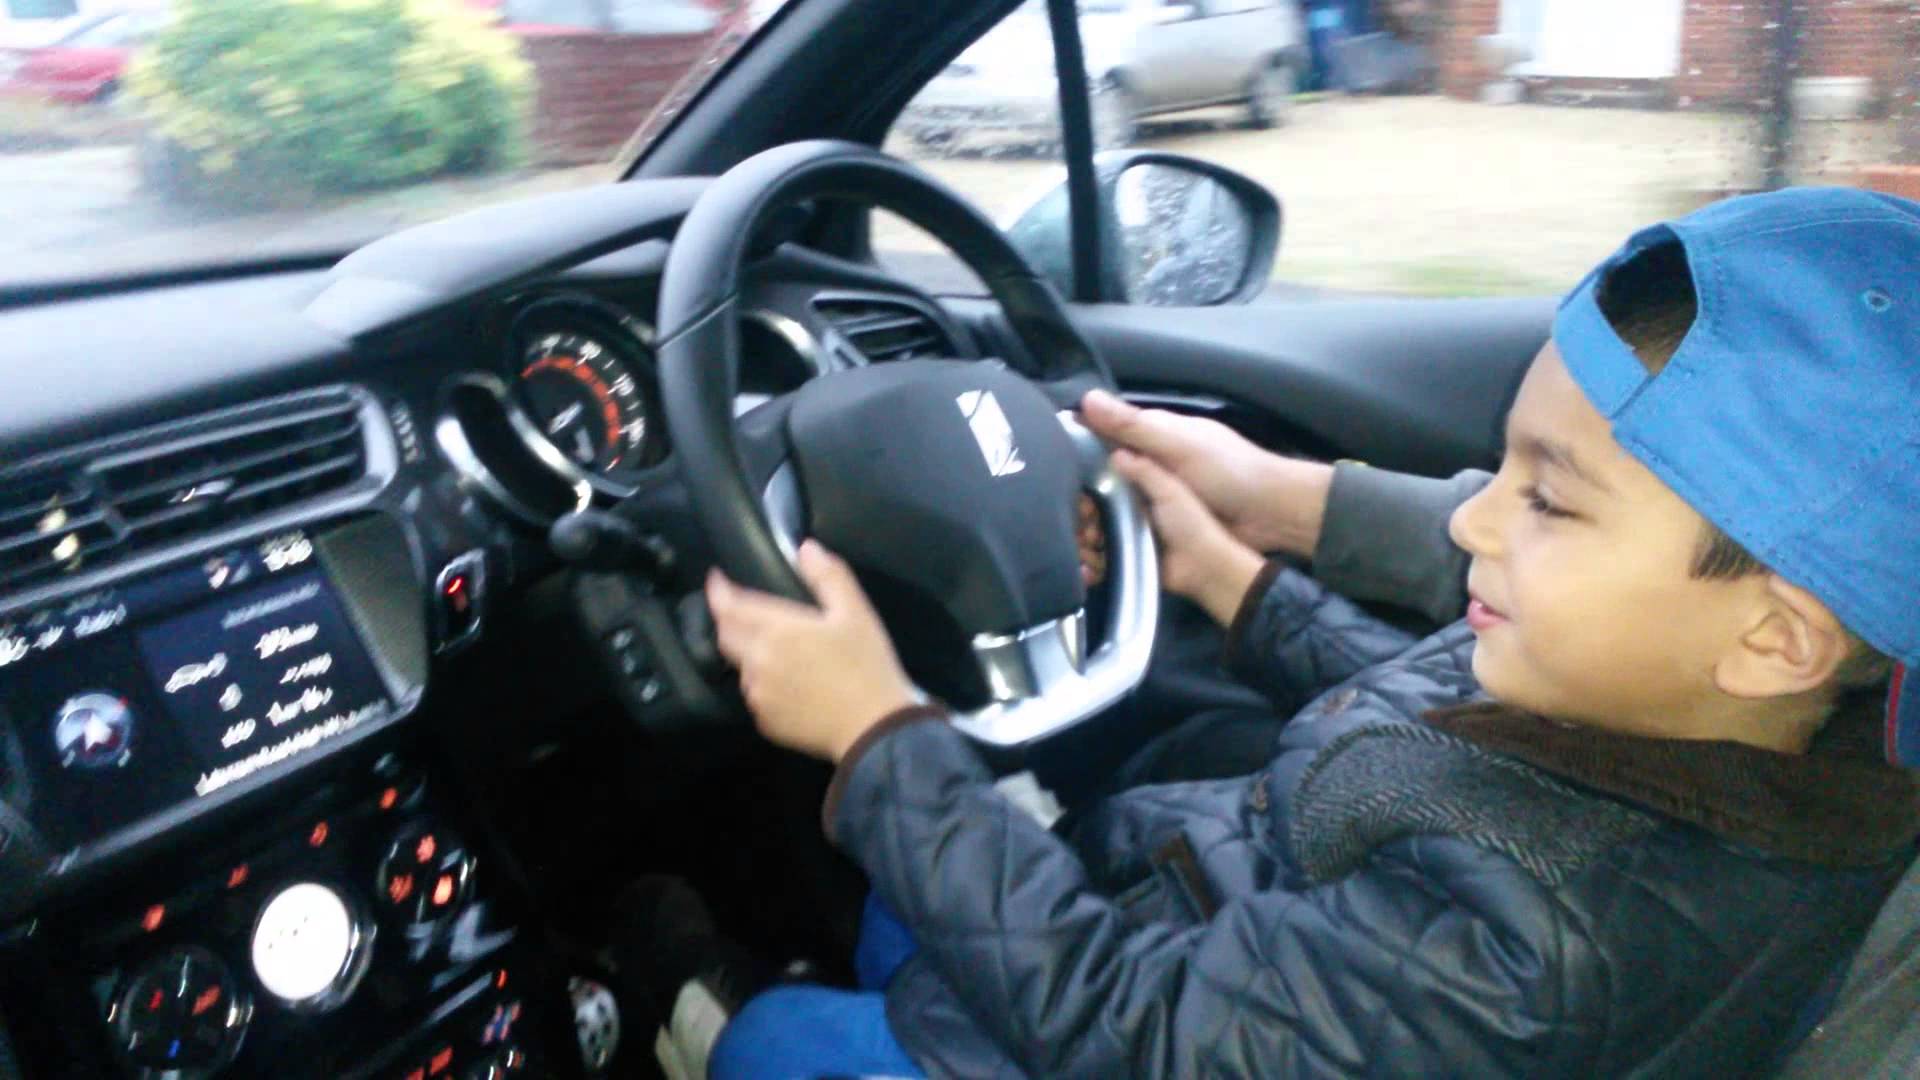 Shakil little boy yamin on 25/12/15 driving a car - YouTube